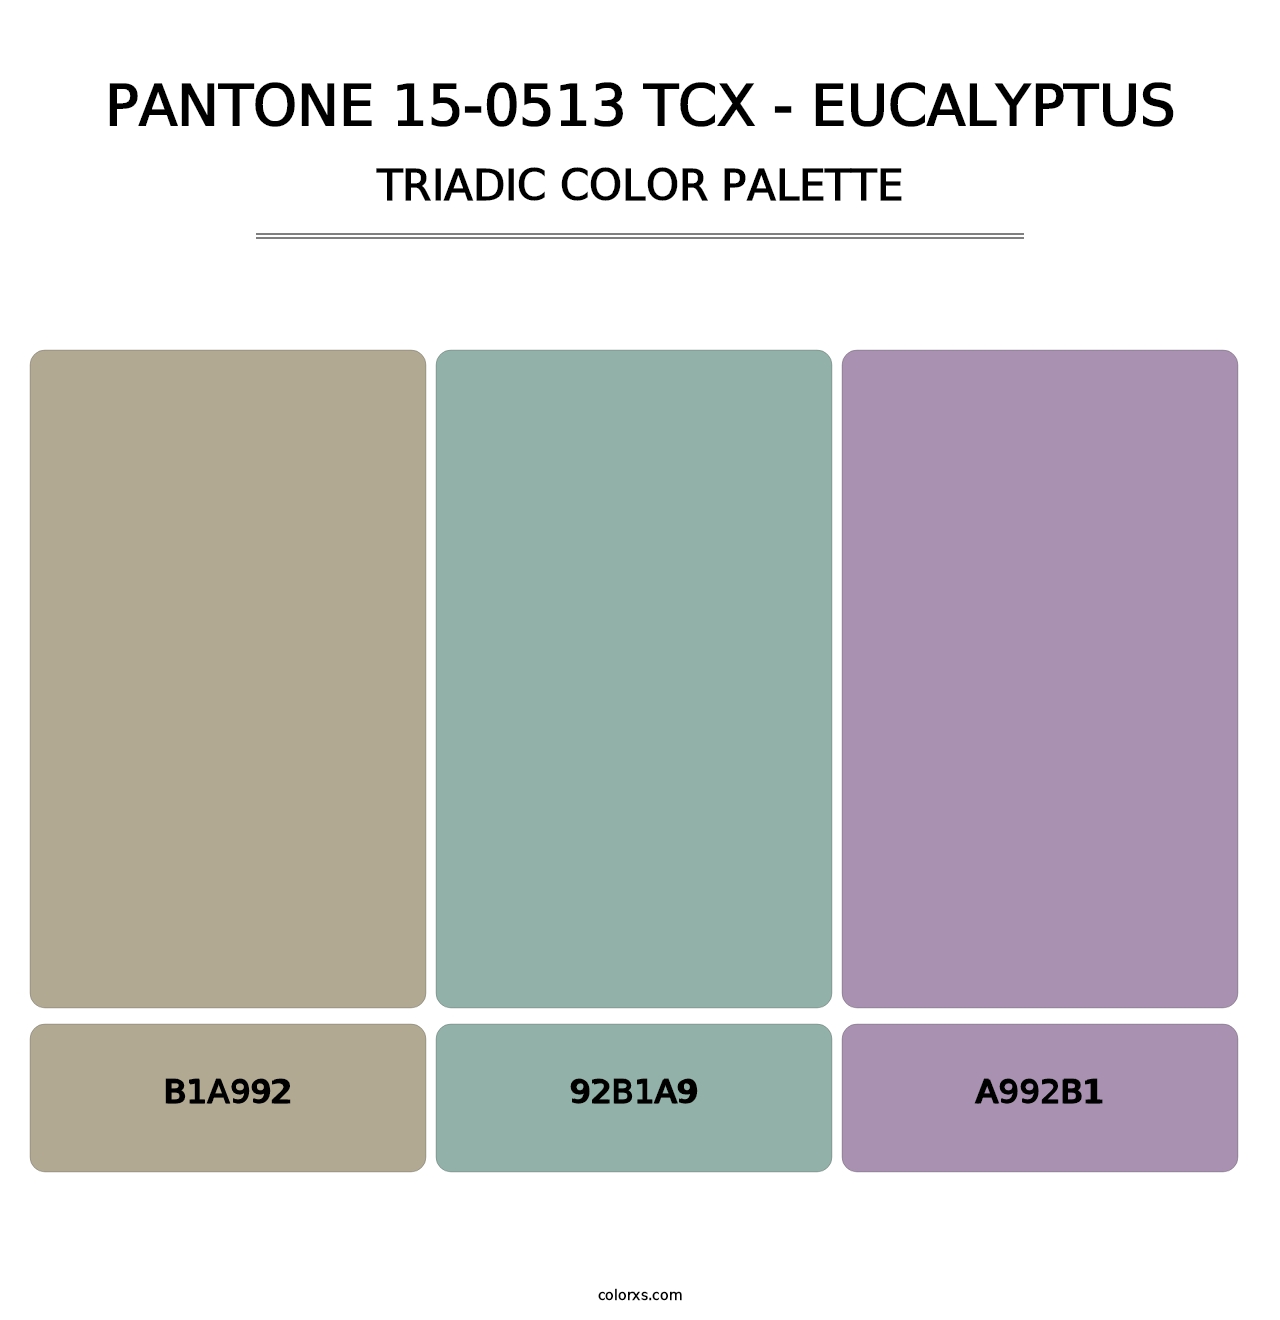 PANTONE 15-0513 TCX - Eucalyptus - Triadic Color Palette